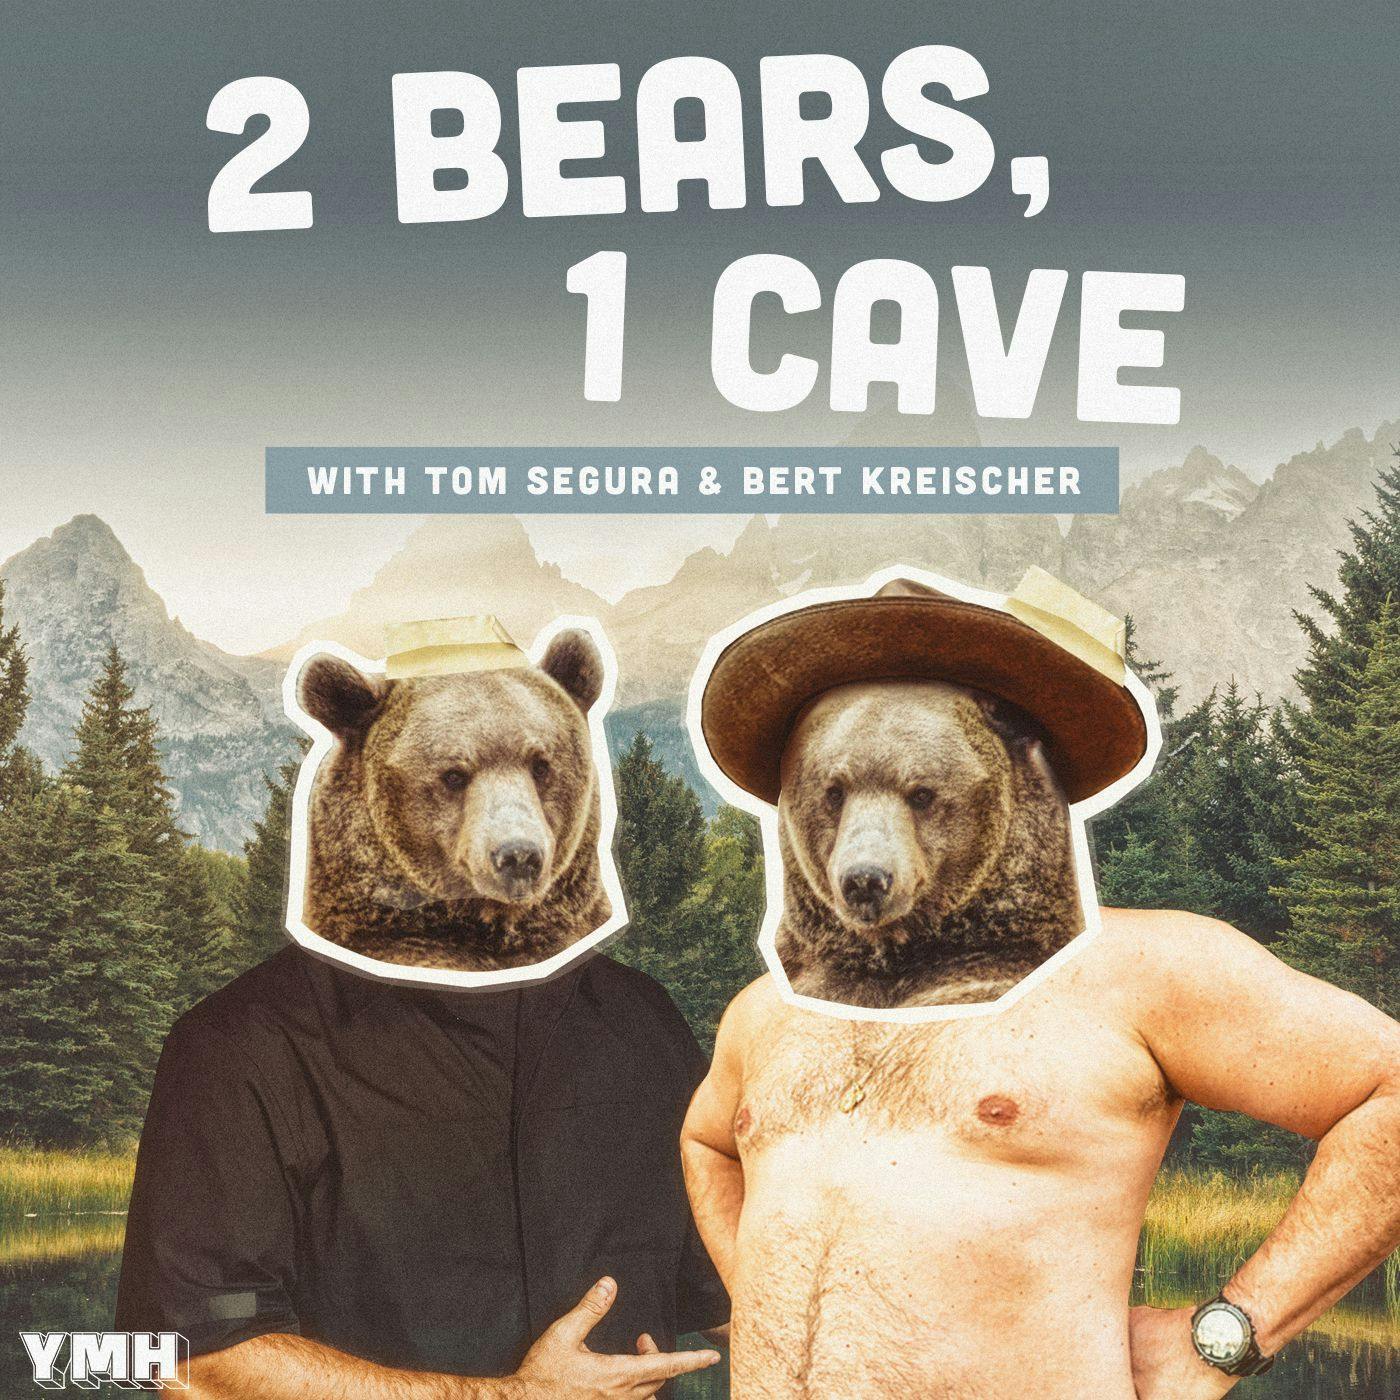 2 Bears, 1 Cave with Tom Segura & Bert Kreischer podcast show image